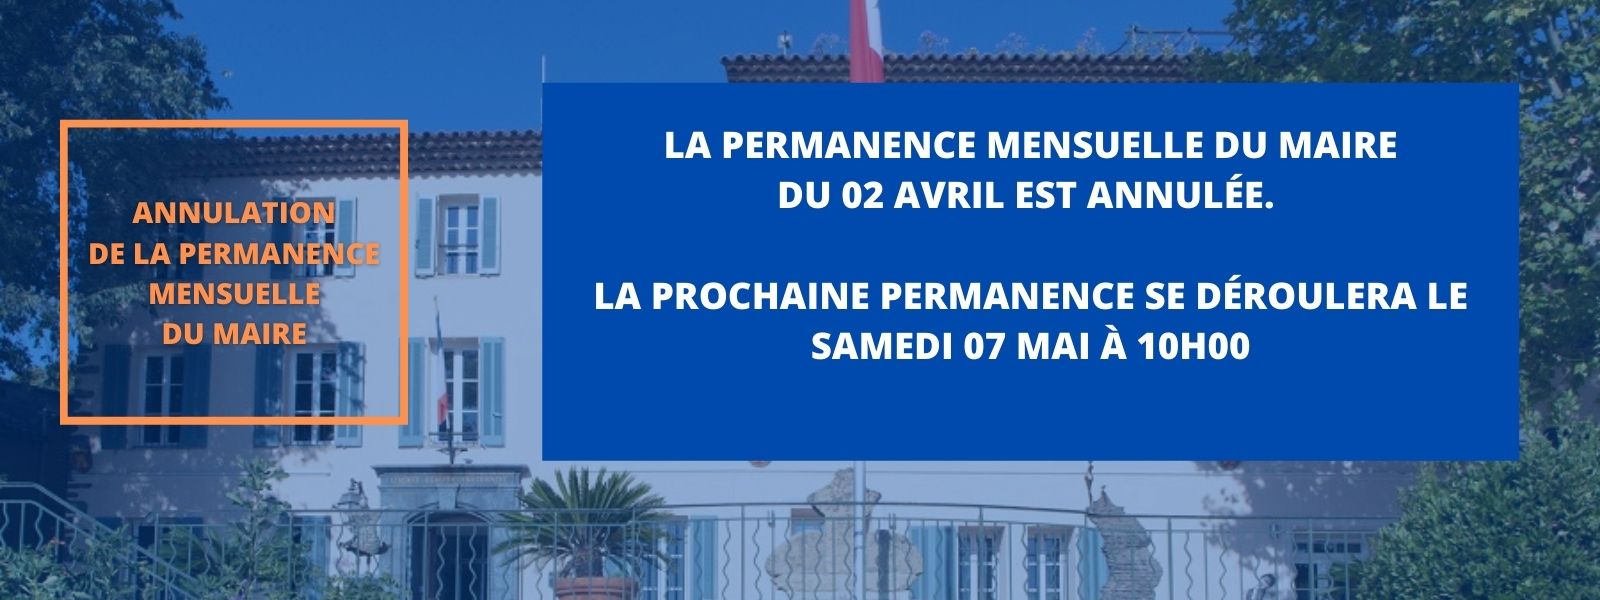 Samedi 02 avril 2022 : annulation de la permanence mensuelle du maire